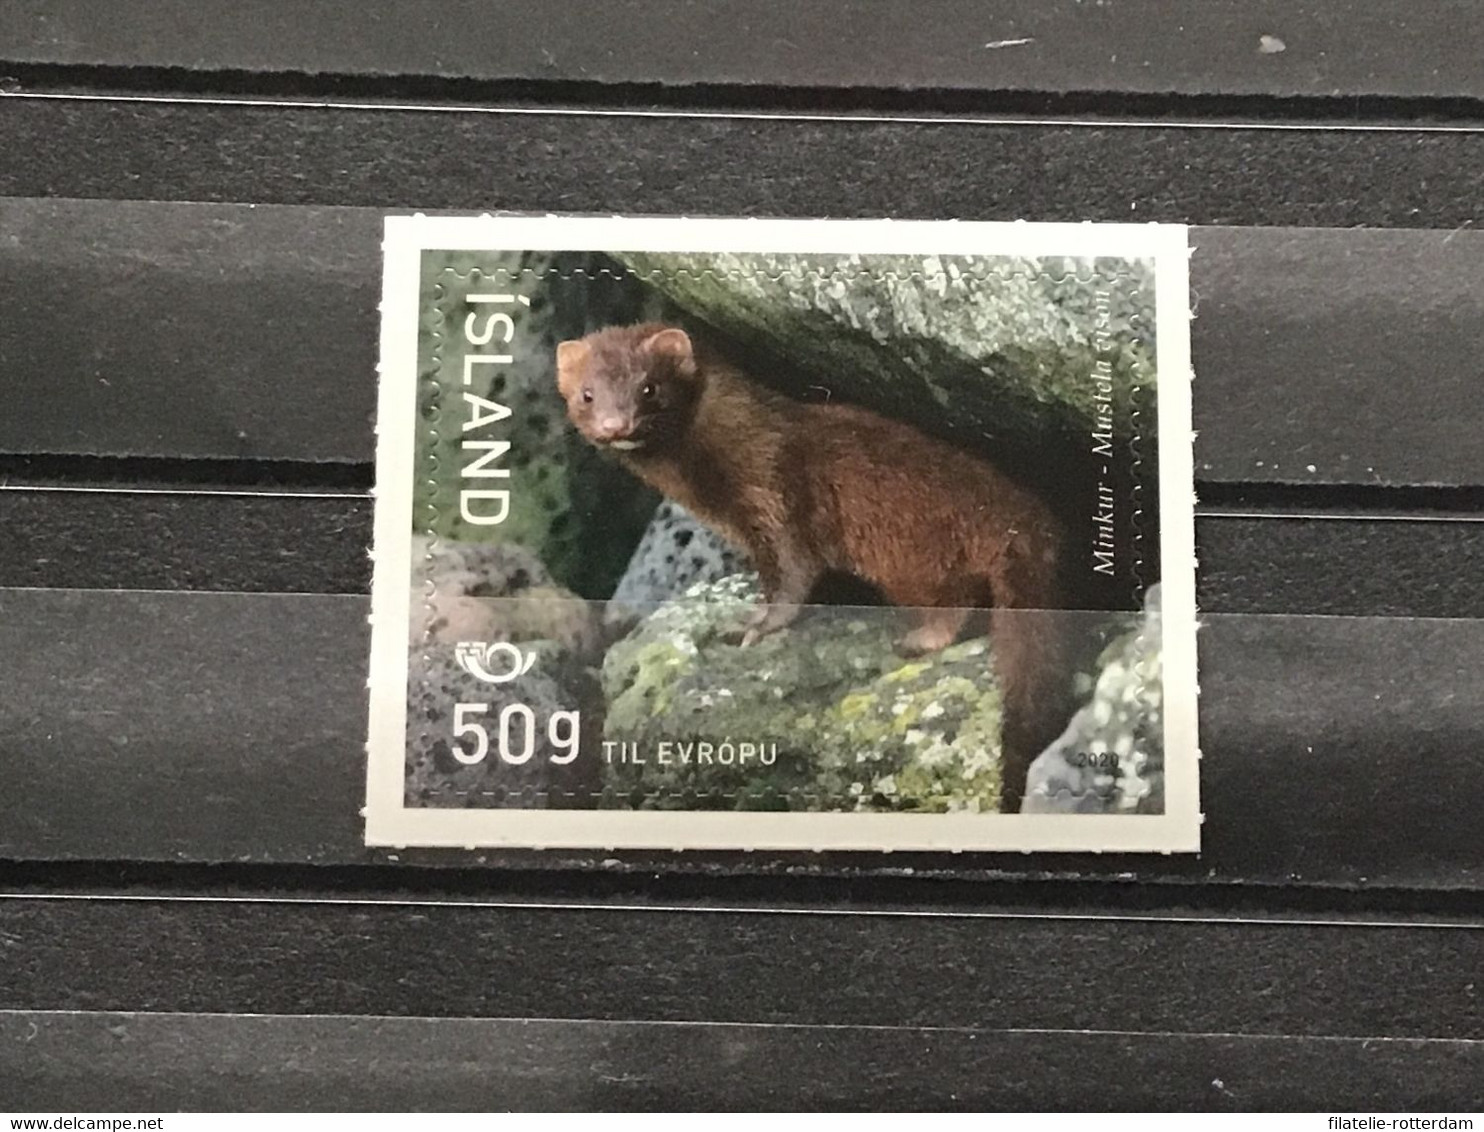 IJsland / Iceland - Postfris / MNH - Fauna 2020 - Unused Stamps